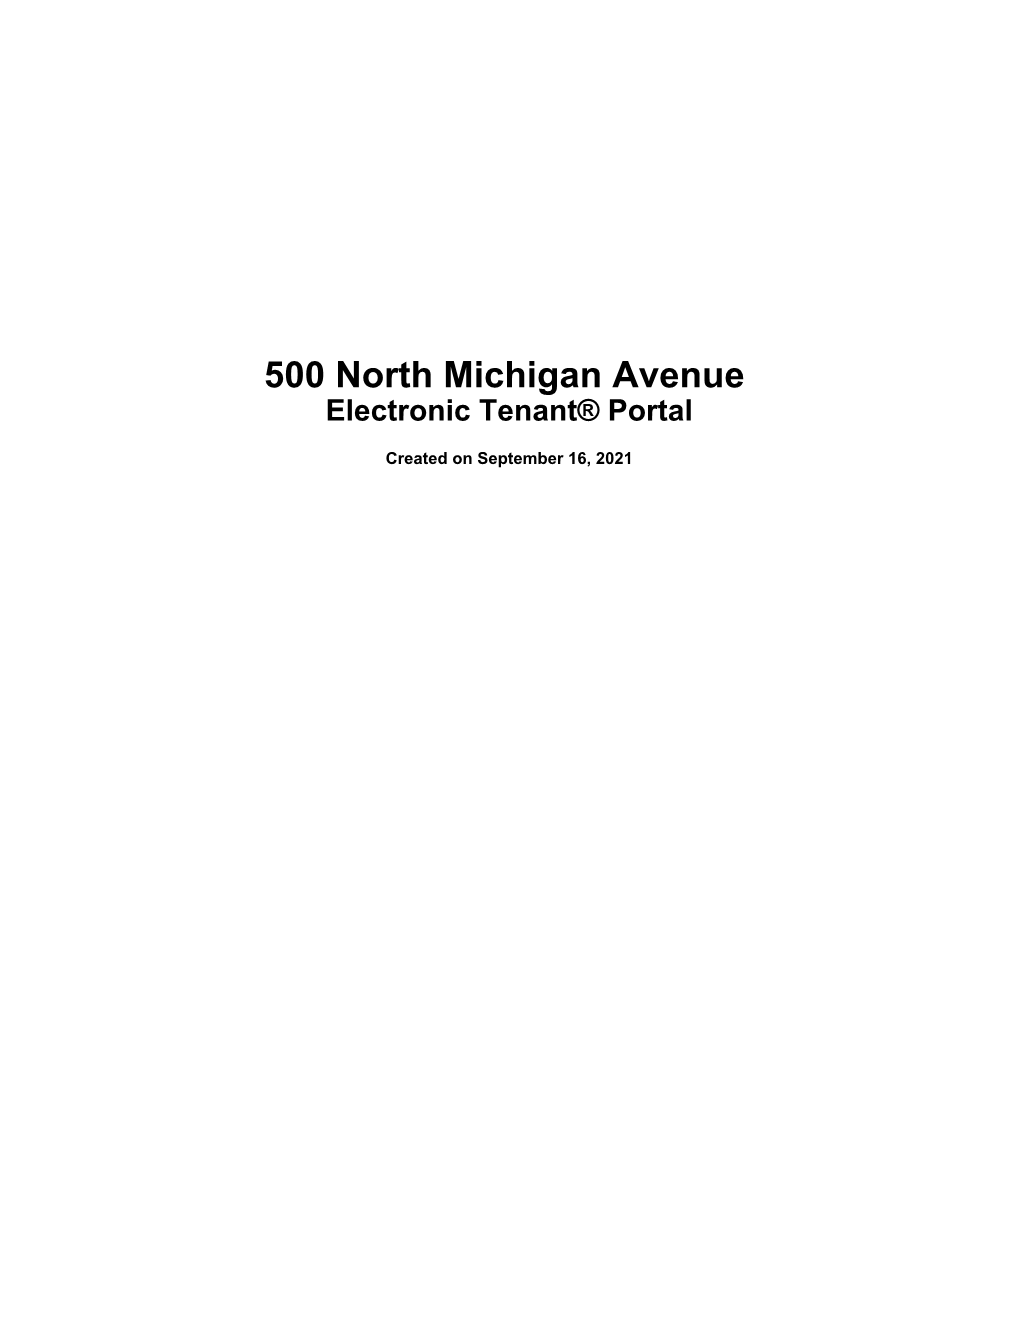 500 North Michigan Avenue Electronic Tenant® Portal